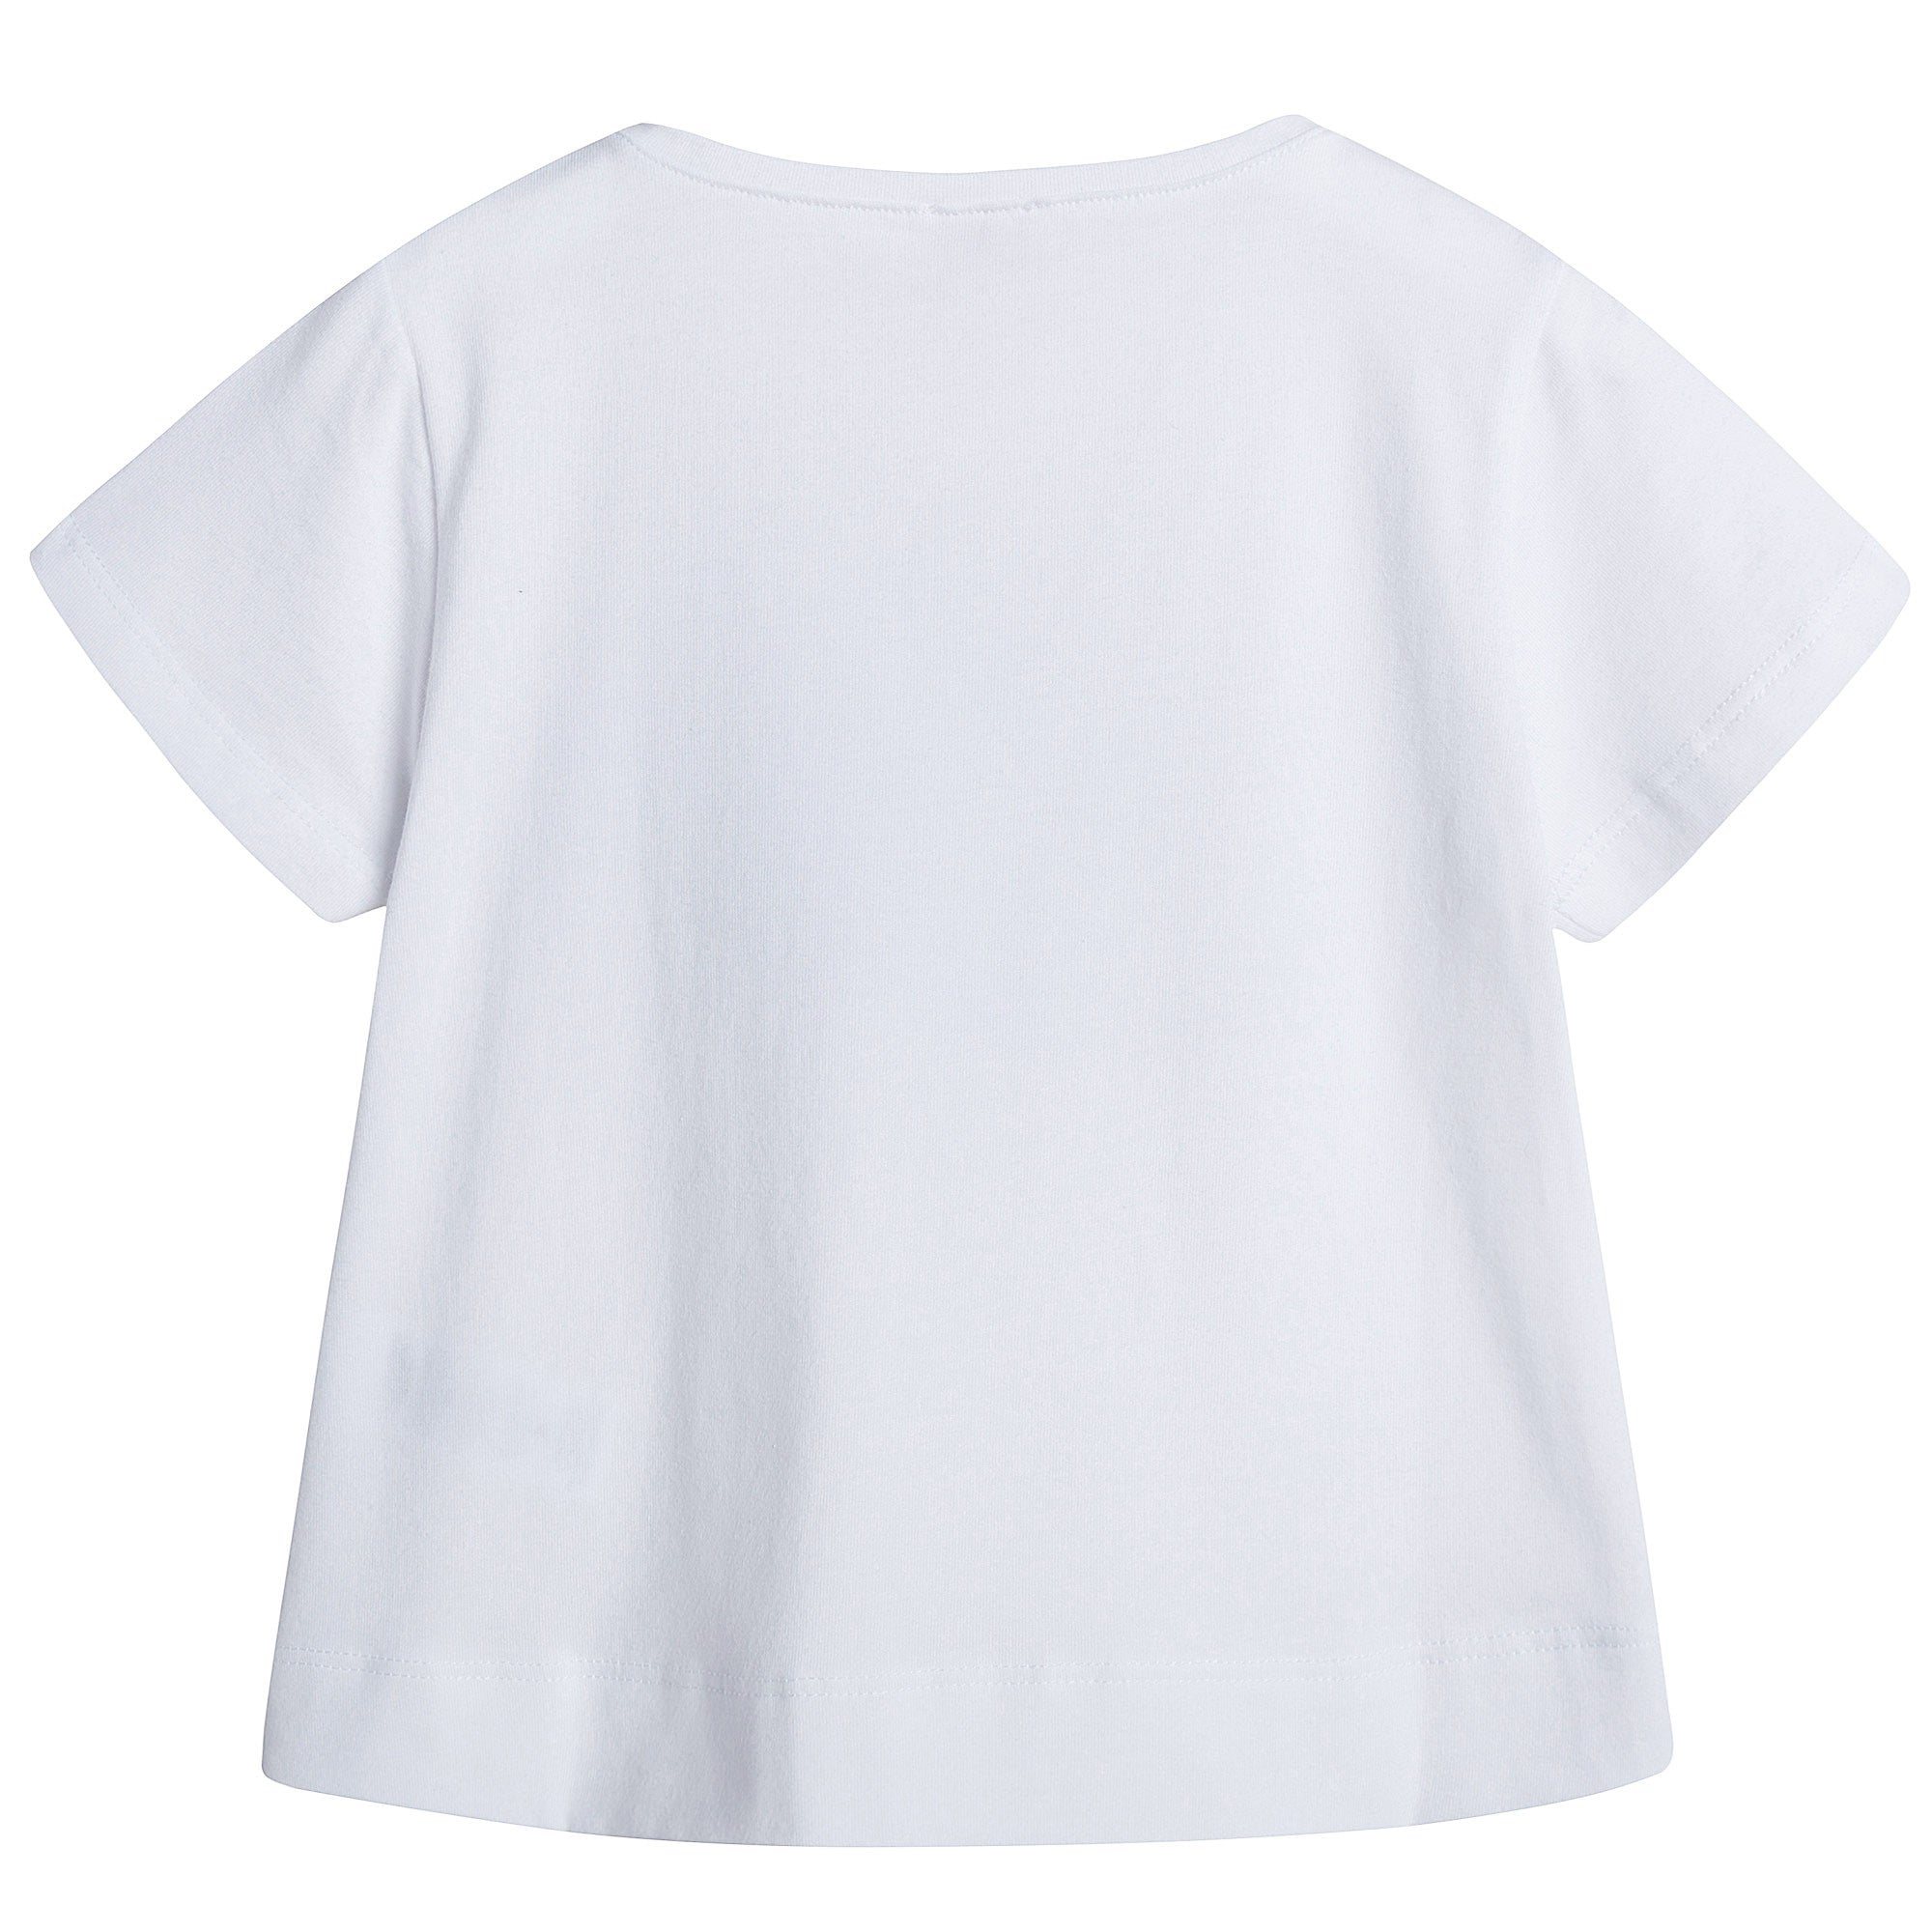 Girls White Cotton T-Shirt With Grey Flower applique - CÉMAROSE | Children's Fashion Store - 2